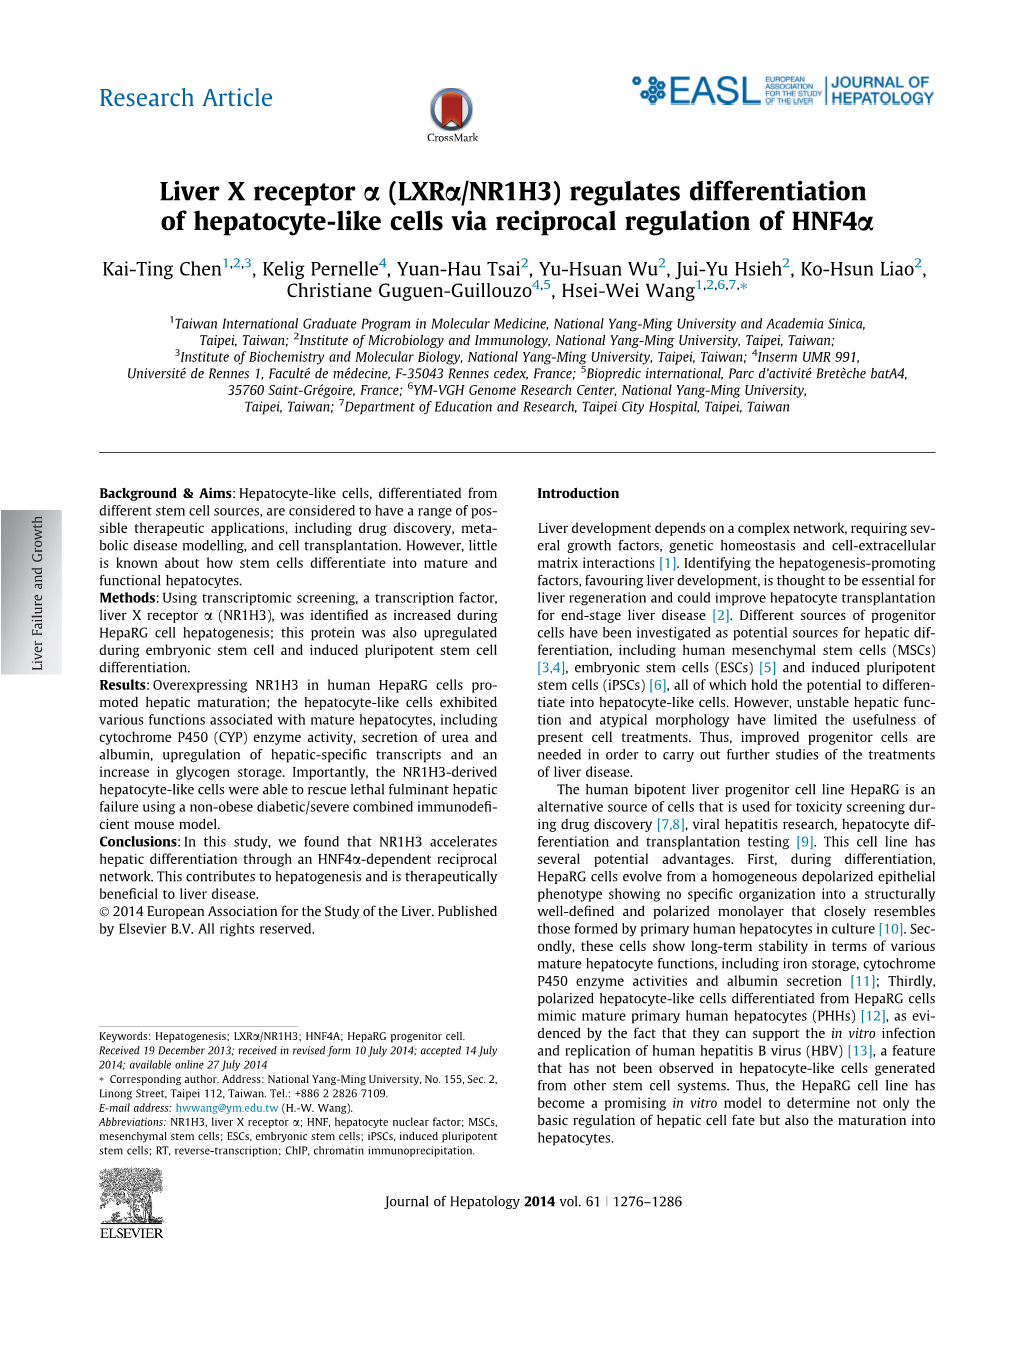 (LXRÎ±/NR1H3) Regulates Differentiation of Hepatocyte-Like